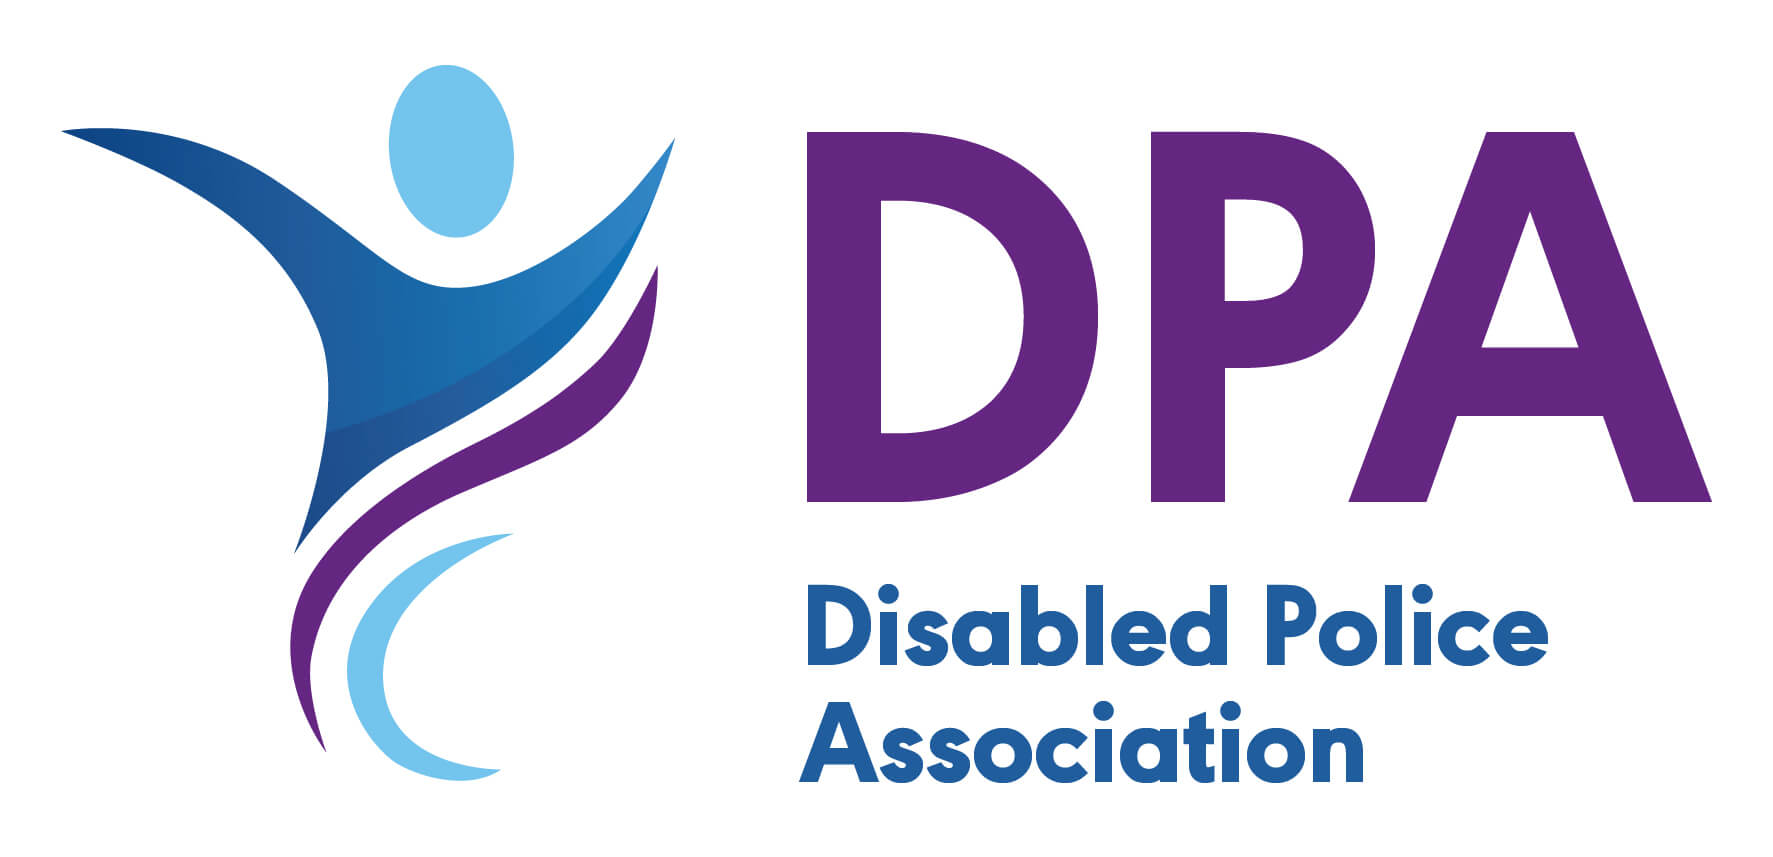 Disabled Police Association logo.